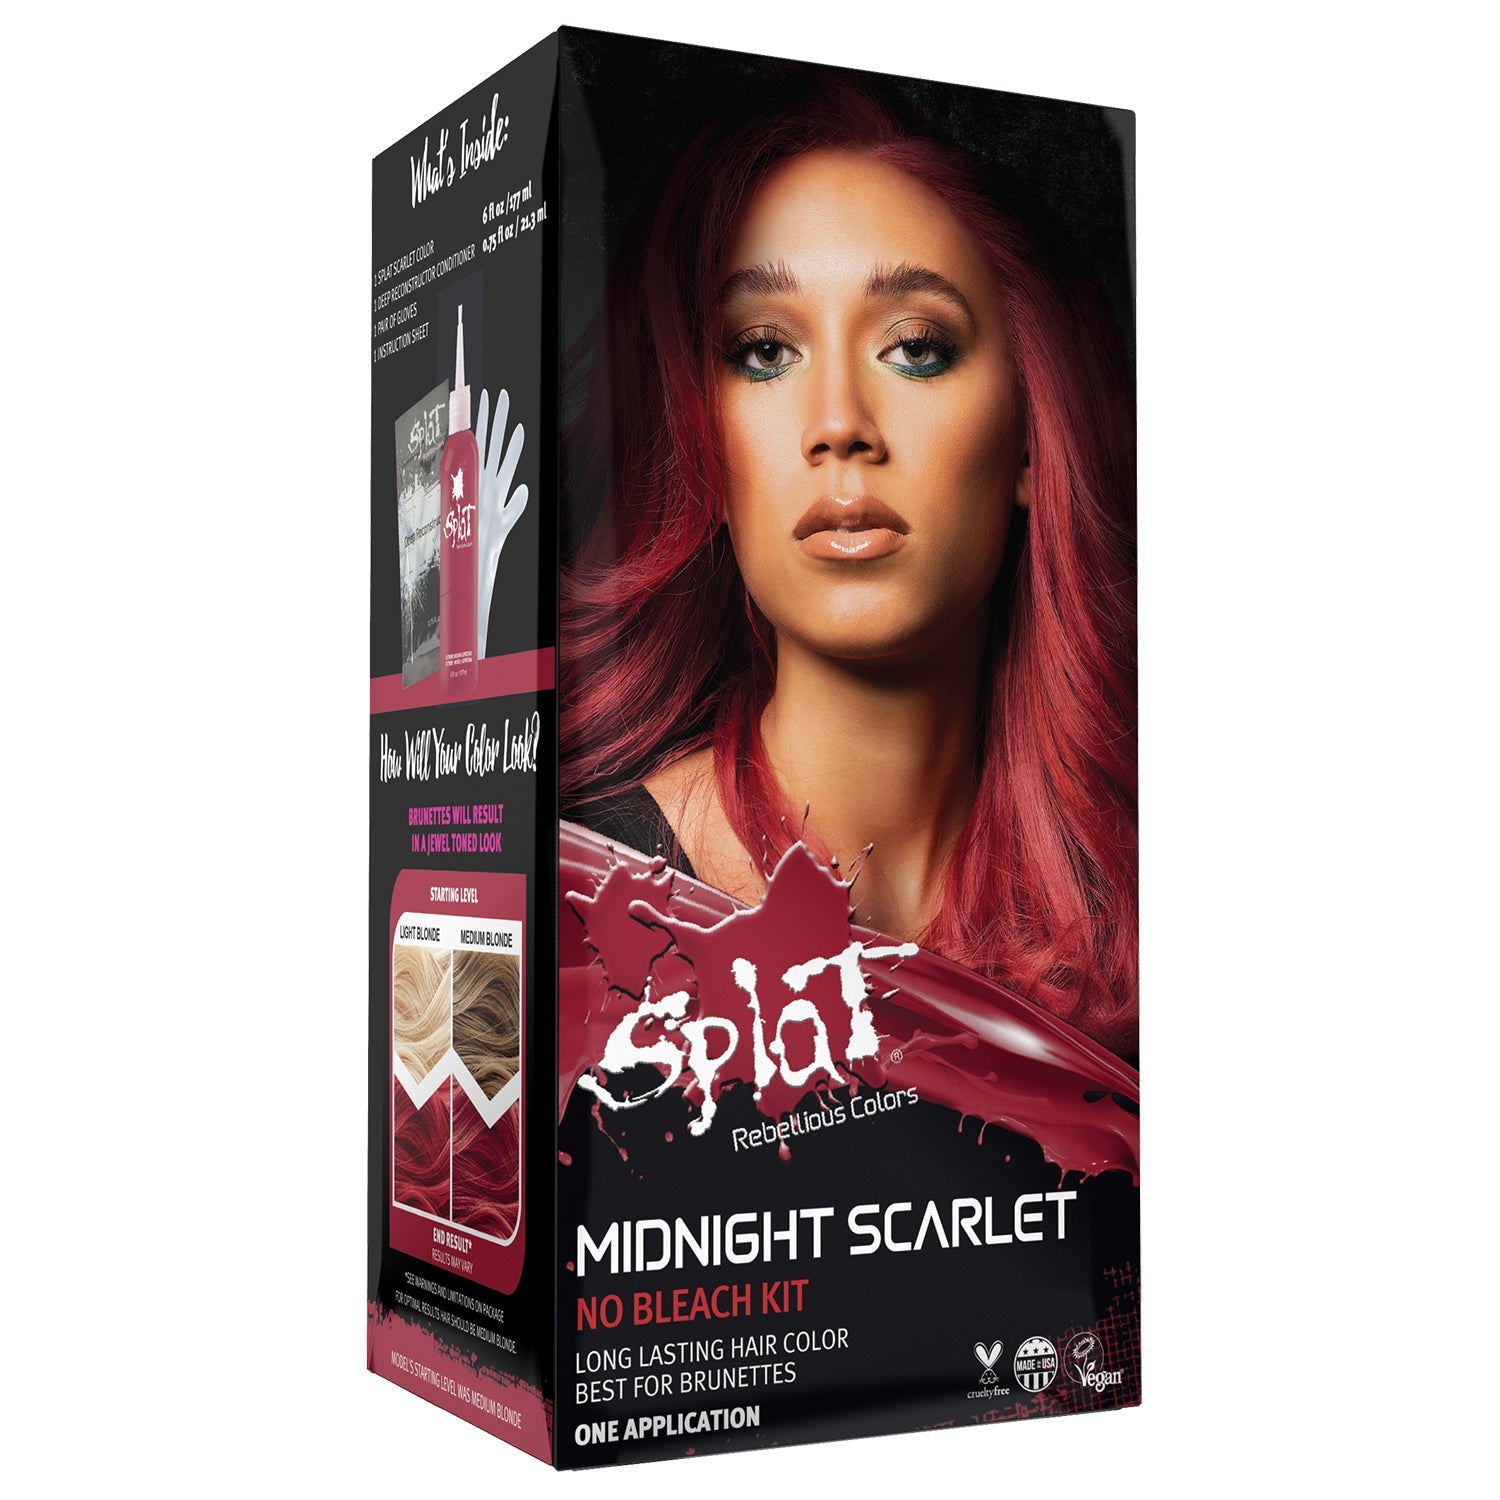 Splat Midnight Semi Permanent Color Kit At Home Hair Dye For Brunettes